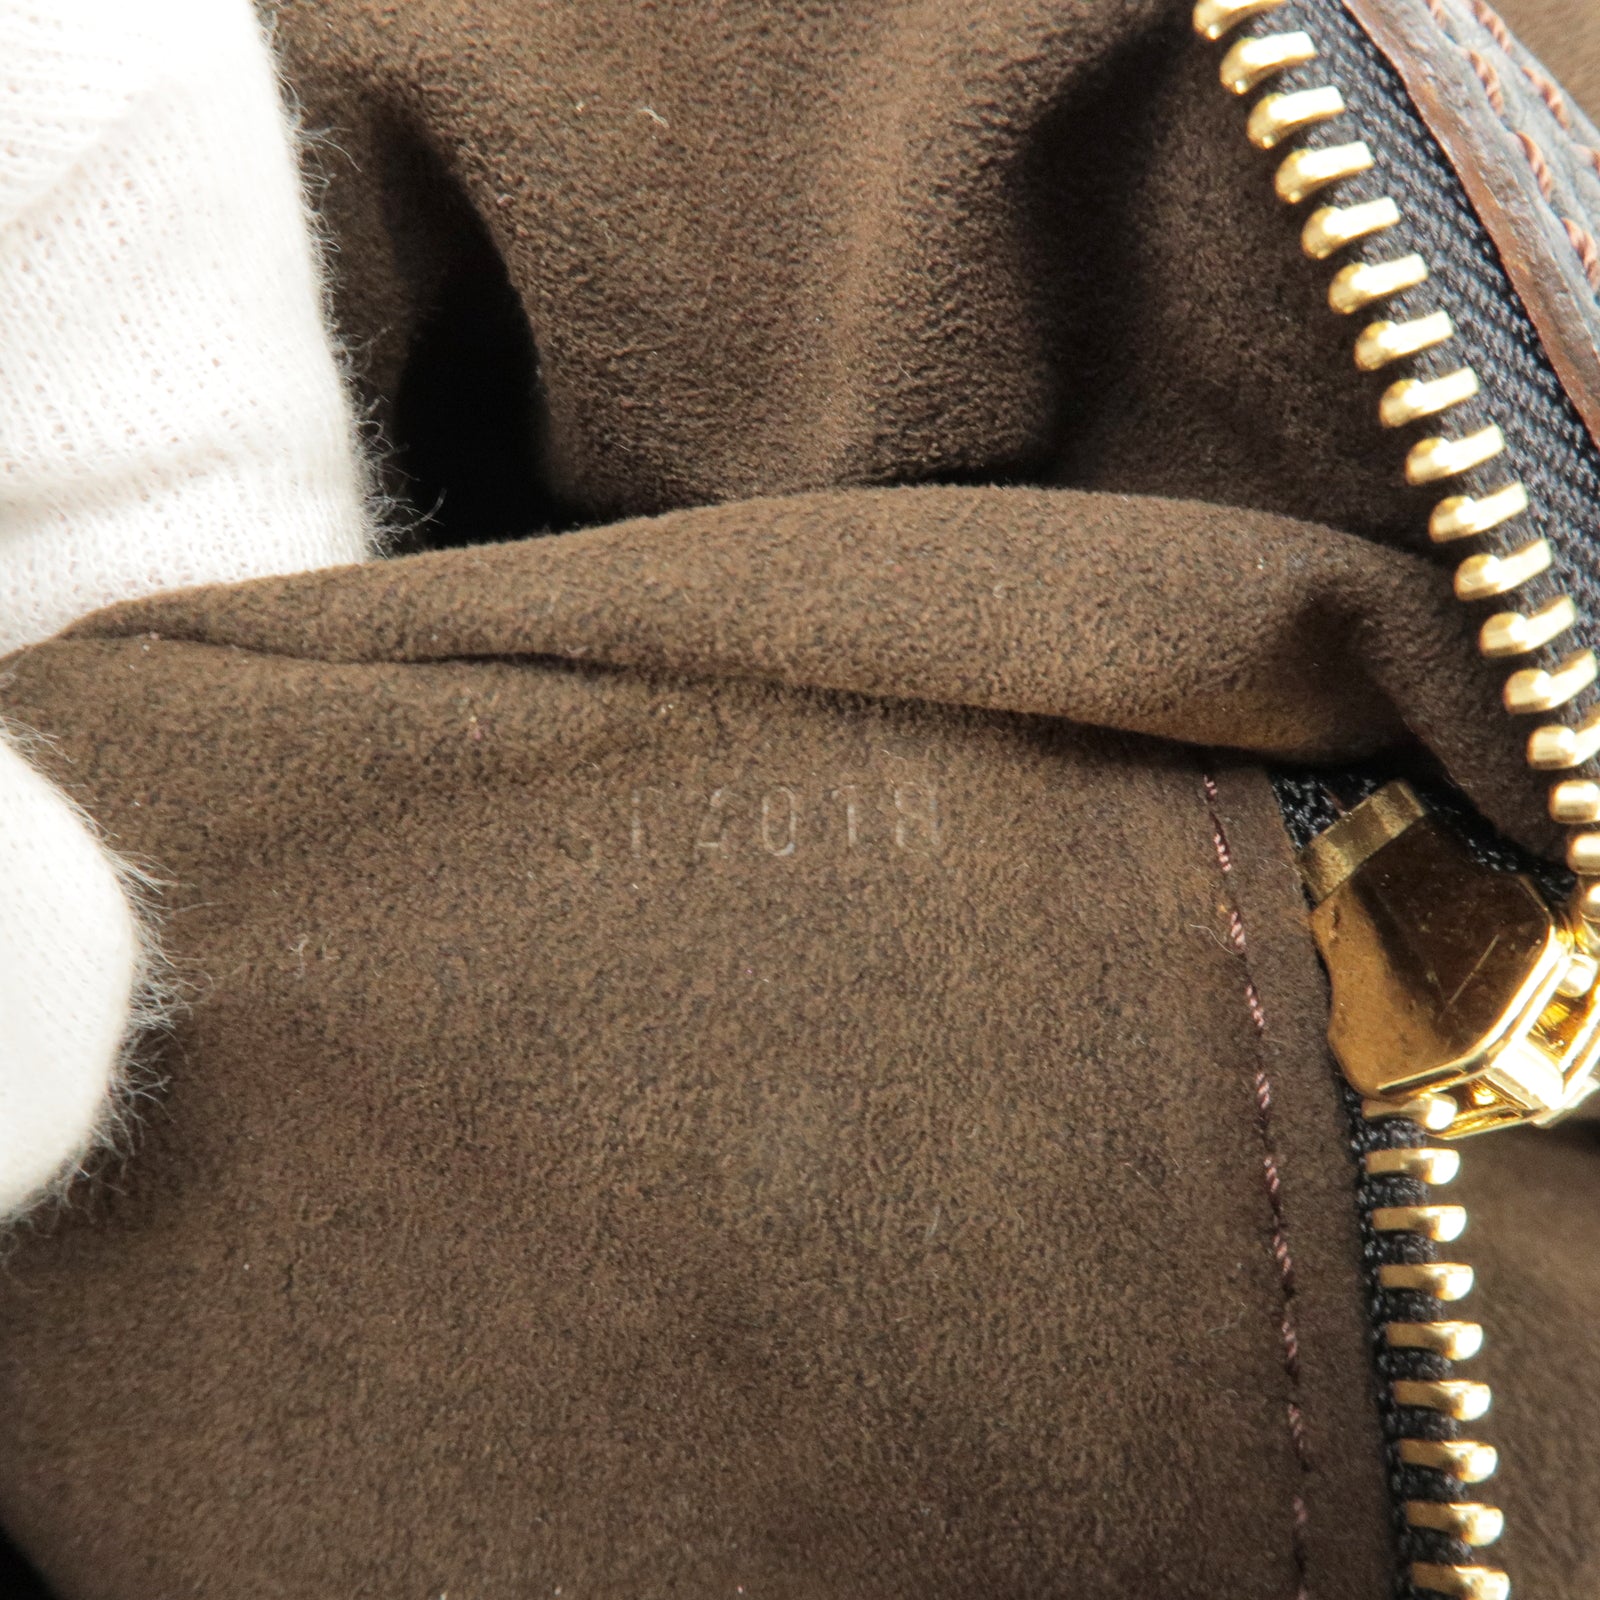 Louis Vuitton NEO L M94282 Noir Mahina Leather - Used Authentic Bag -  9brandname